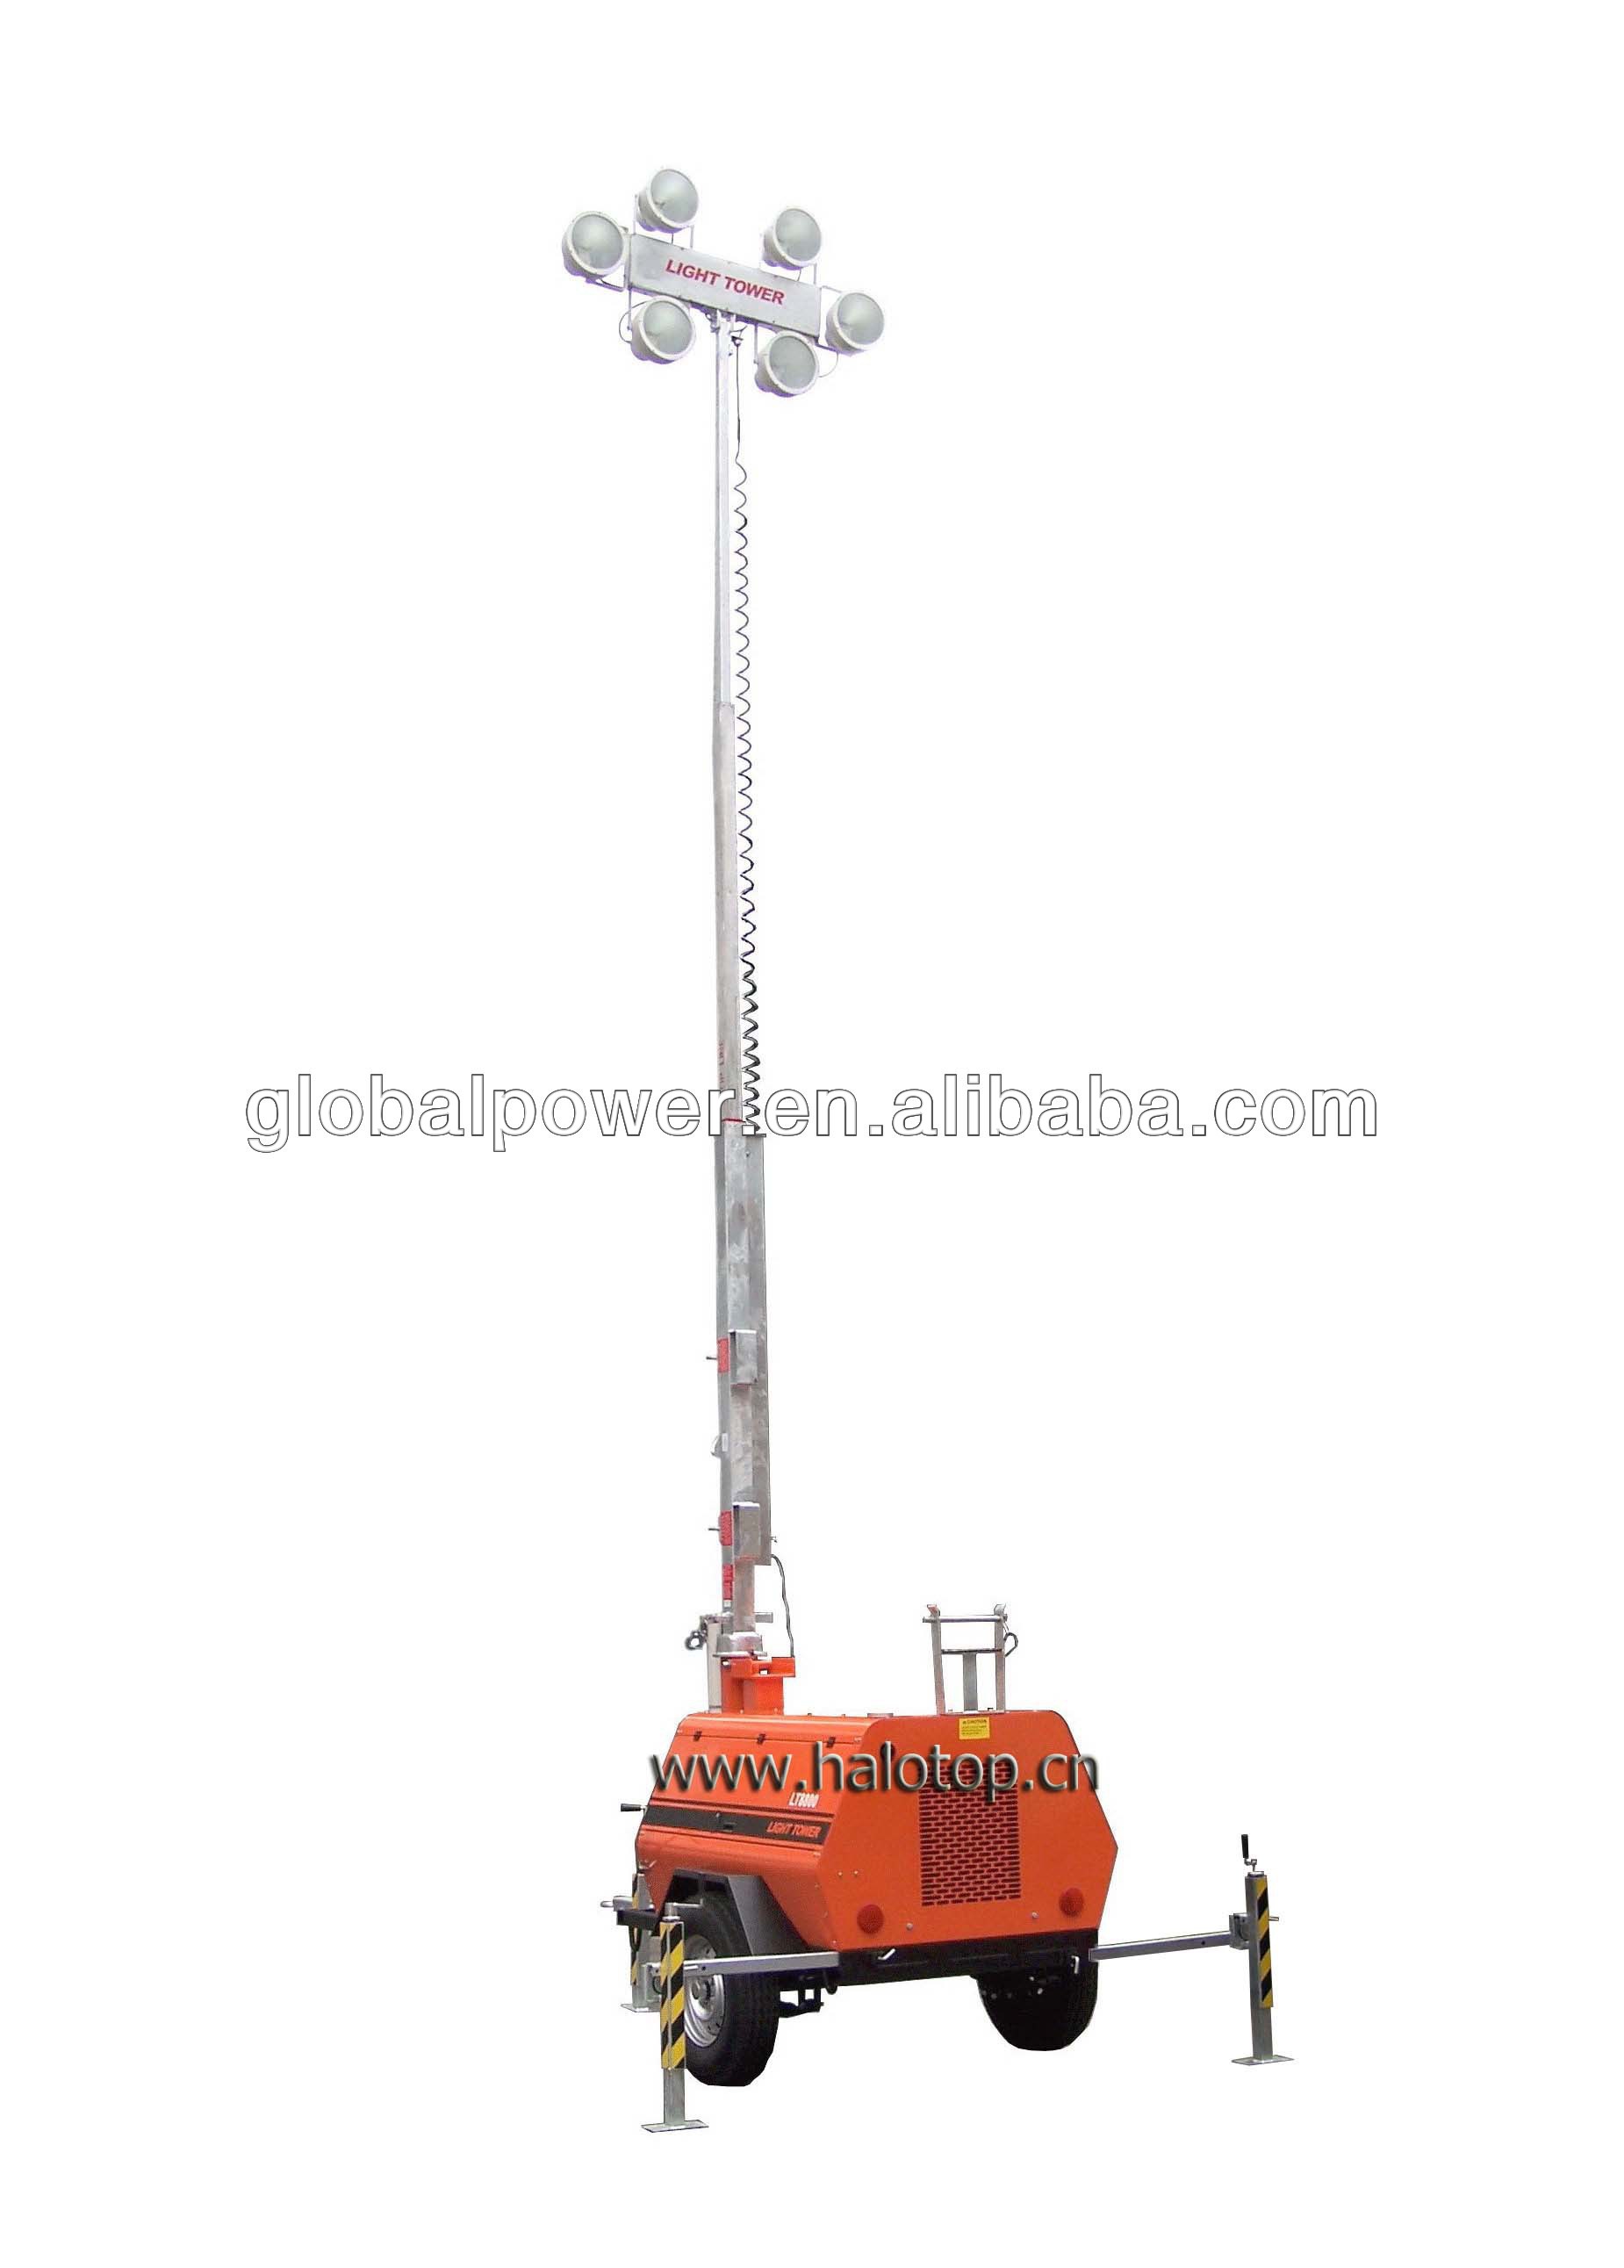 Lighting Tower Generator/ Mobil lighting tower/ tower light